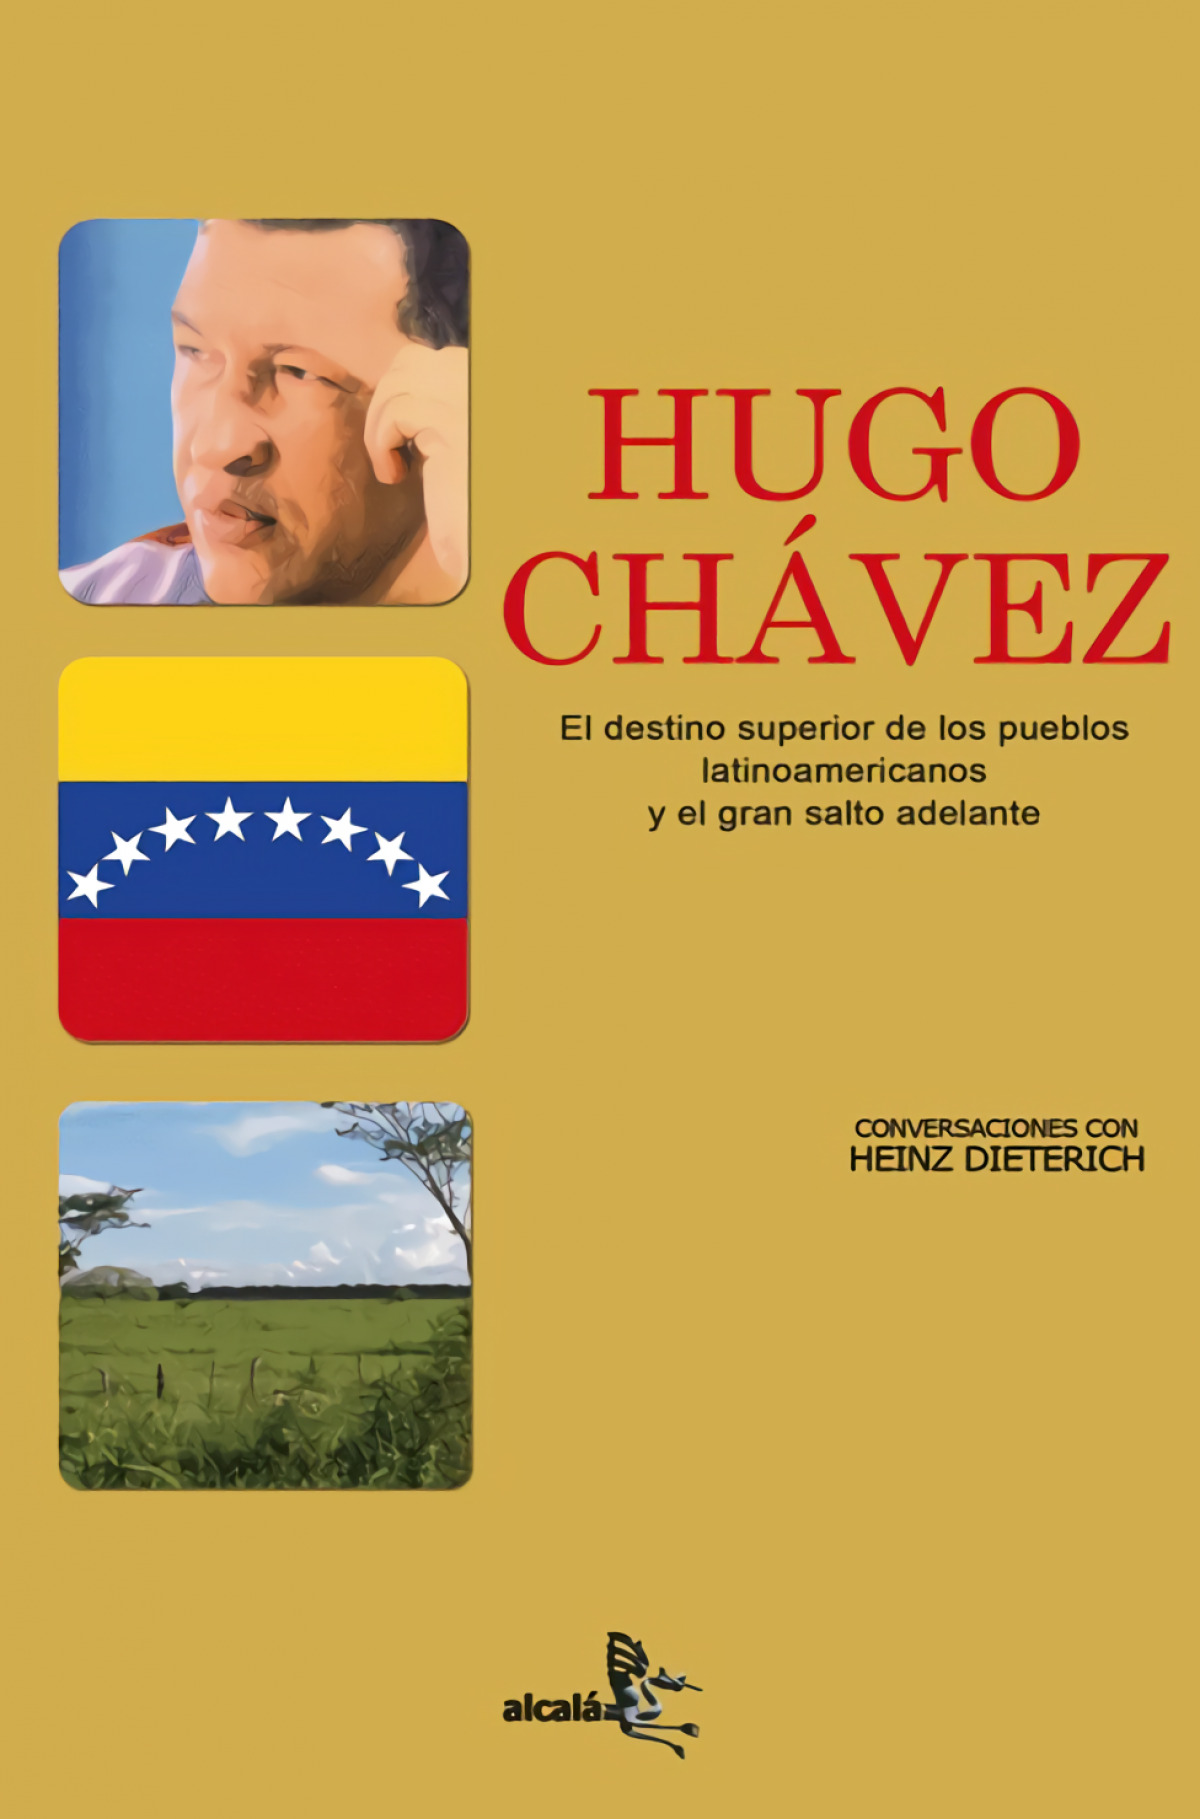 Hugo chavez - Dieterich, Heinz